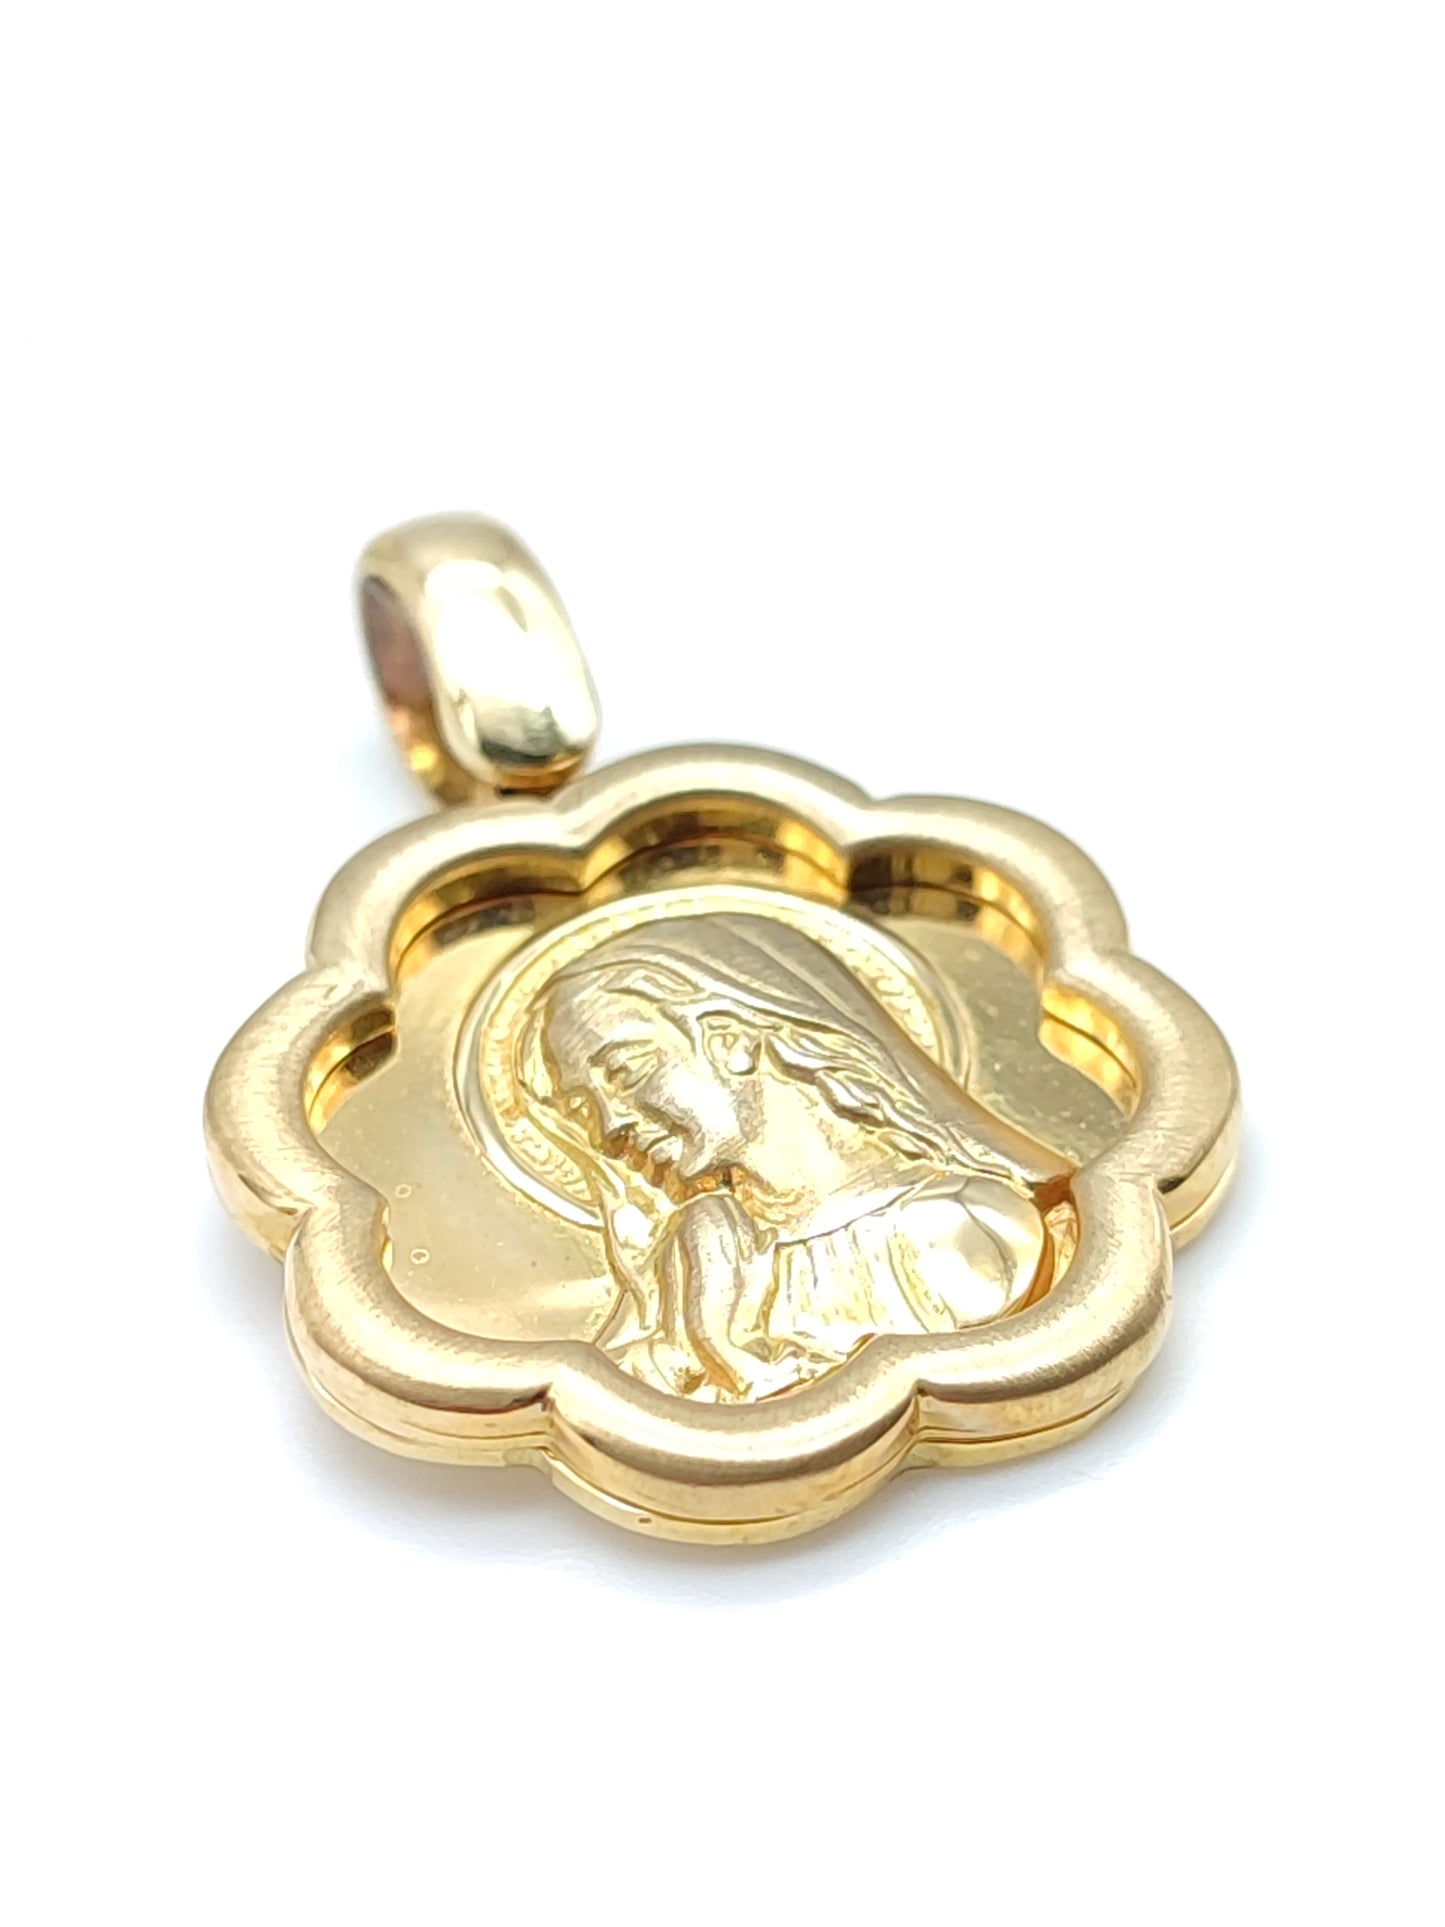 Massive Madonna gold pendant